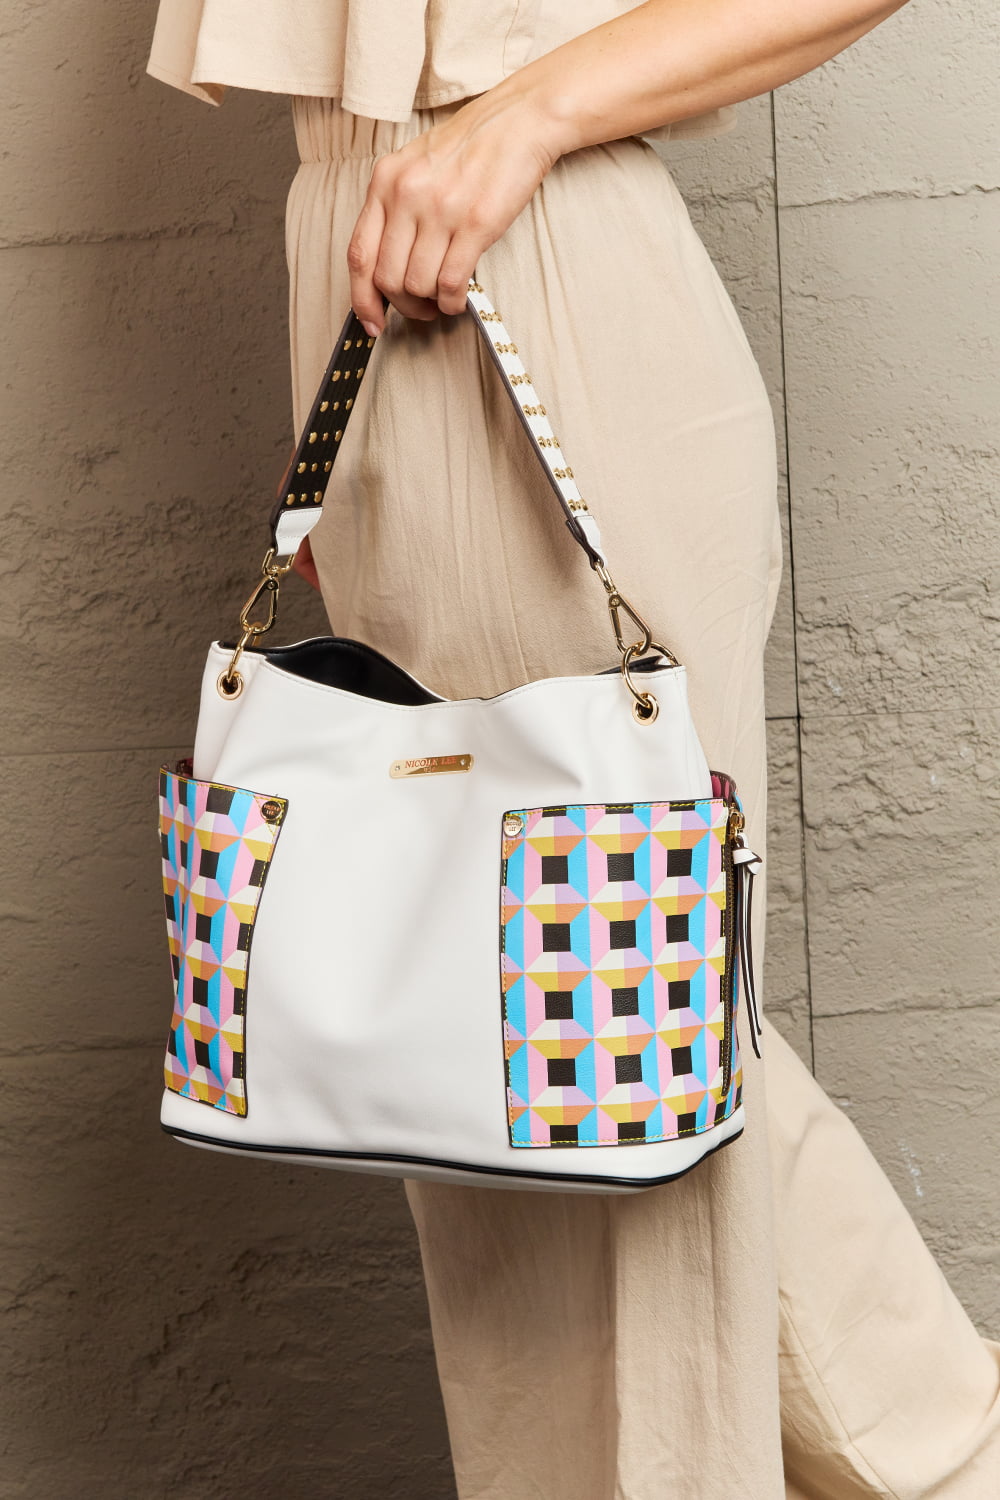 Nicole Lee USA Quihn 3-Piece Handbag Set Multi Style